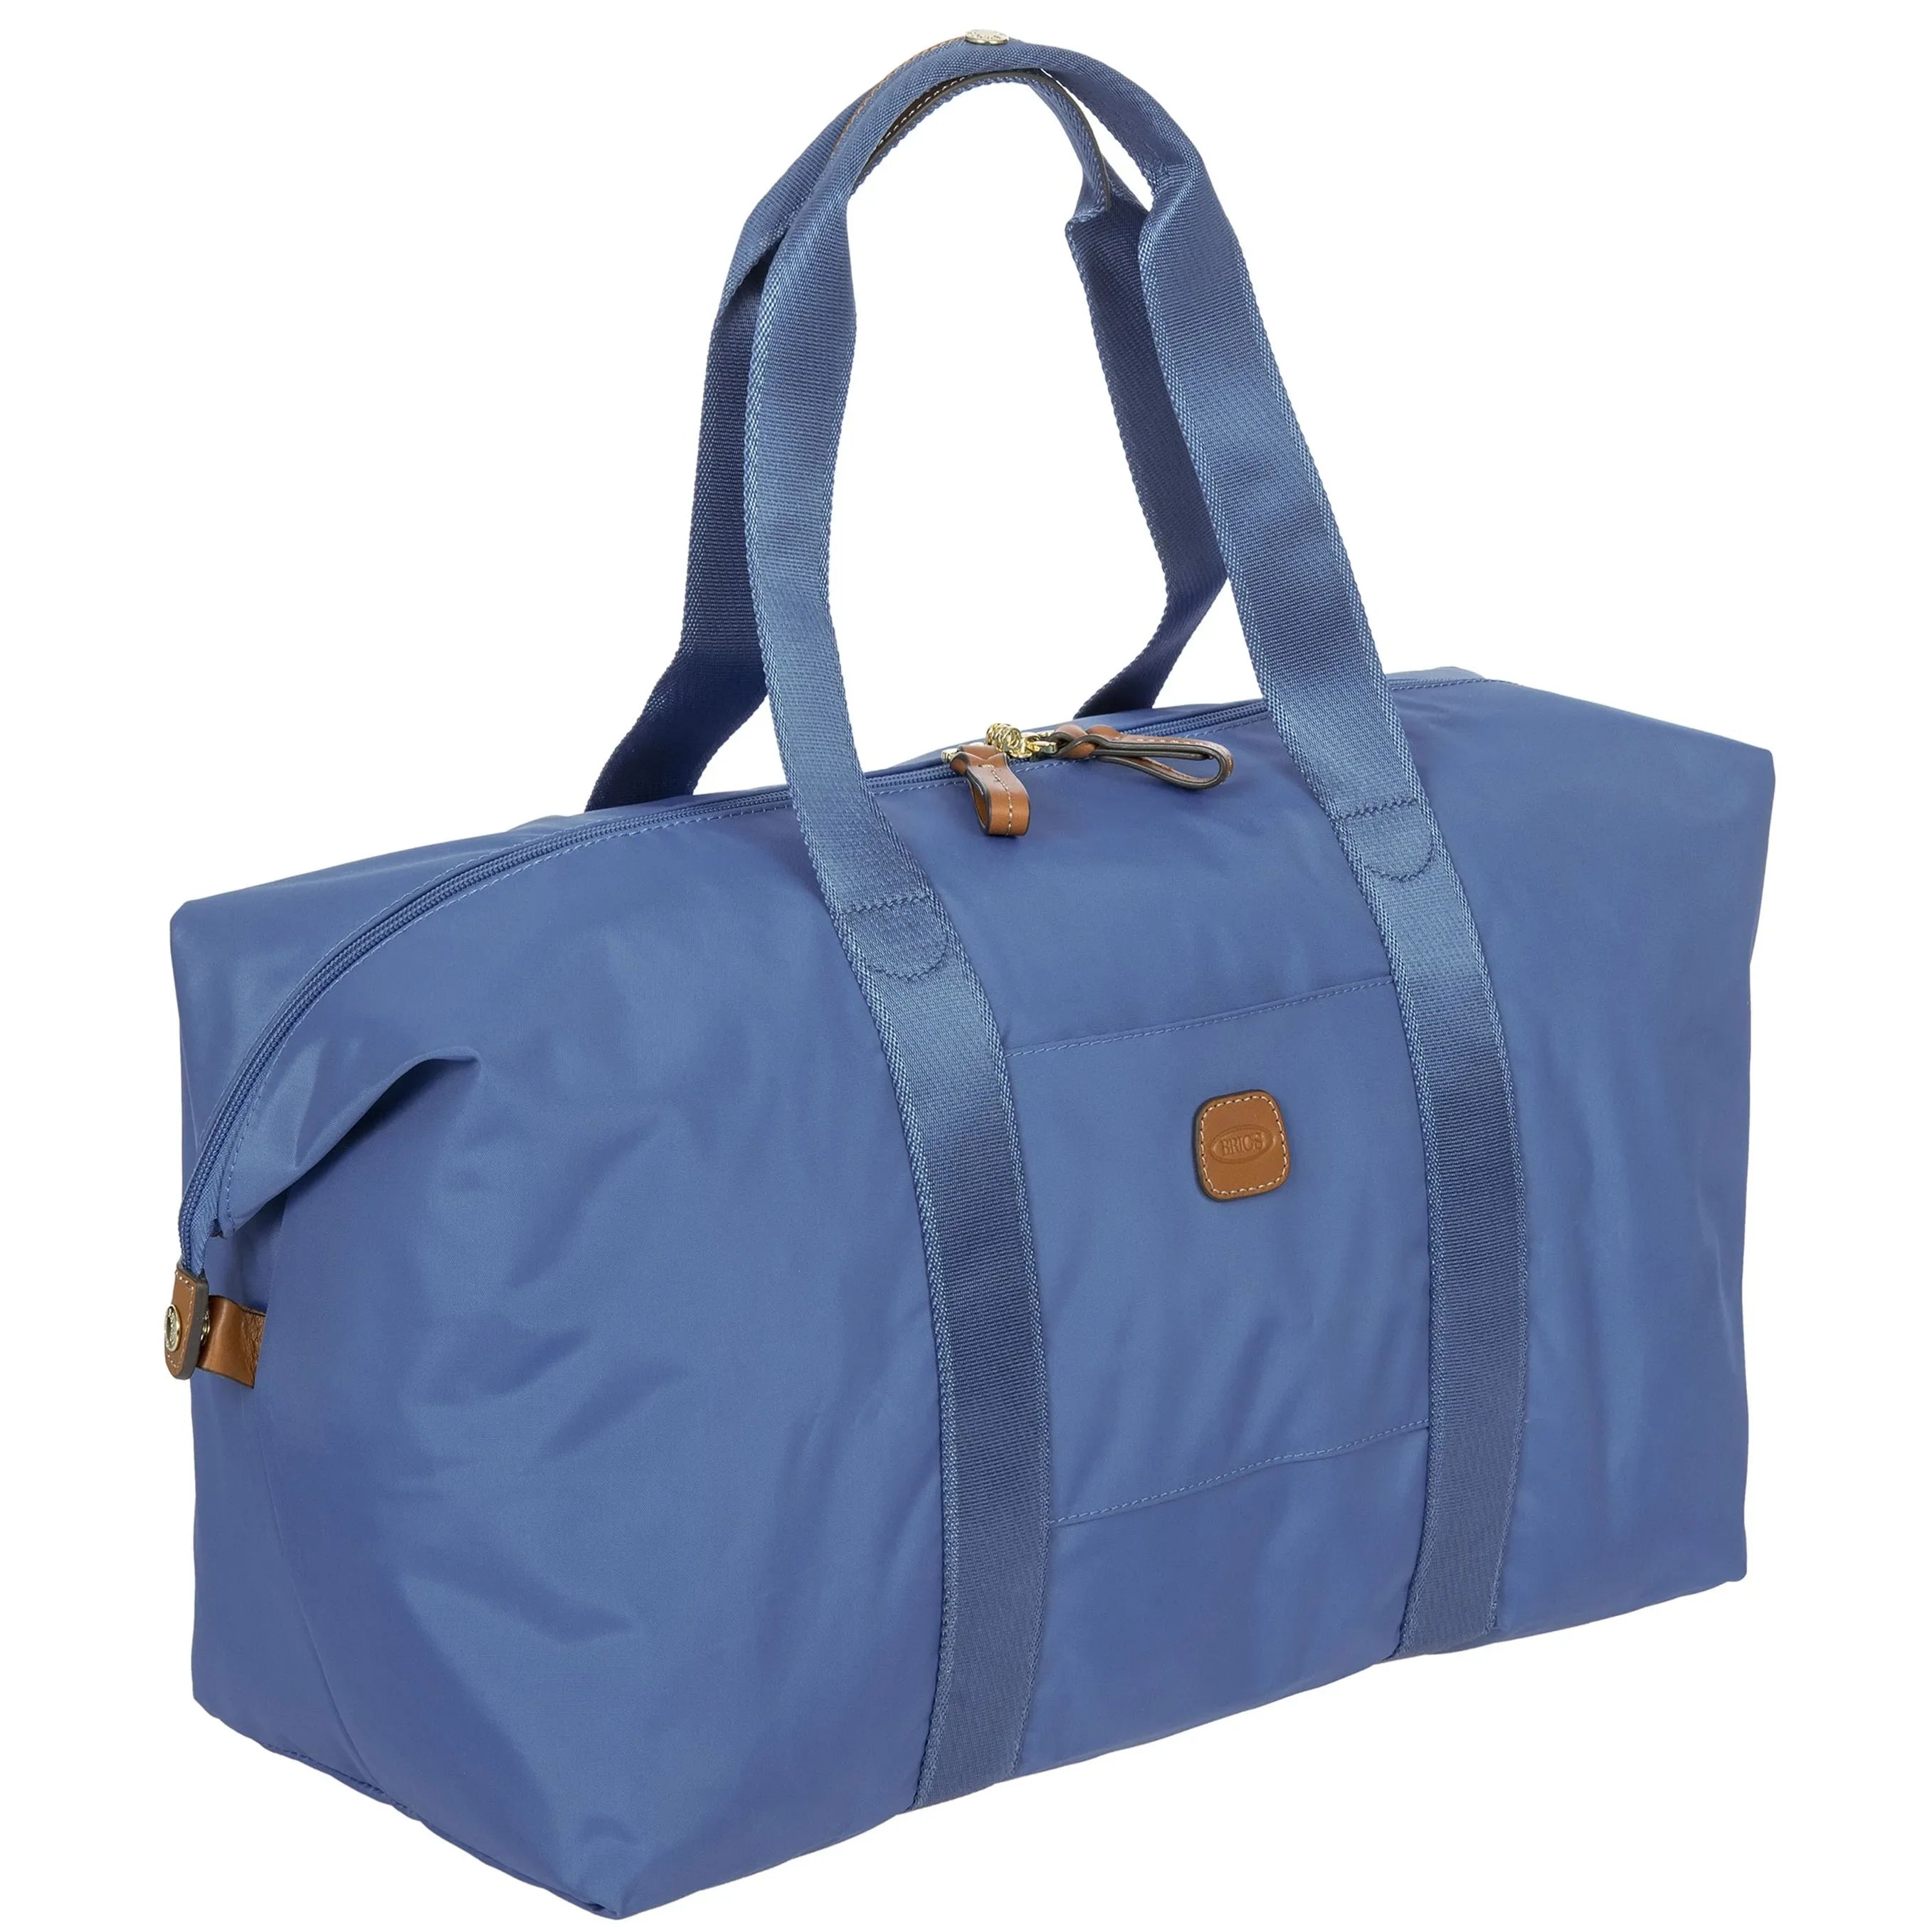 Brics X-Bag travel bag 43 cm - navy